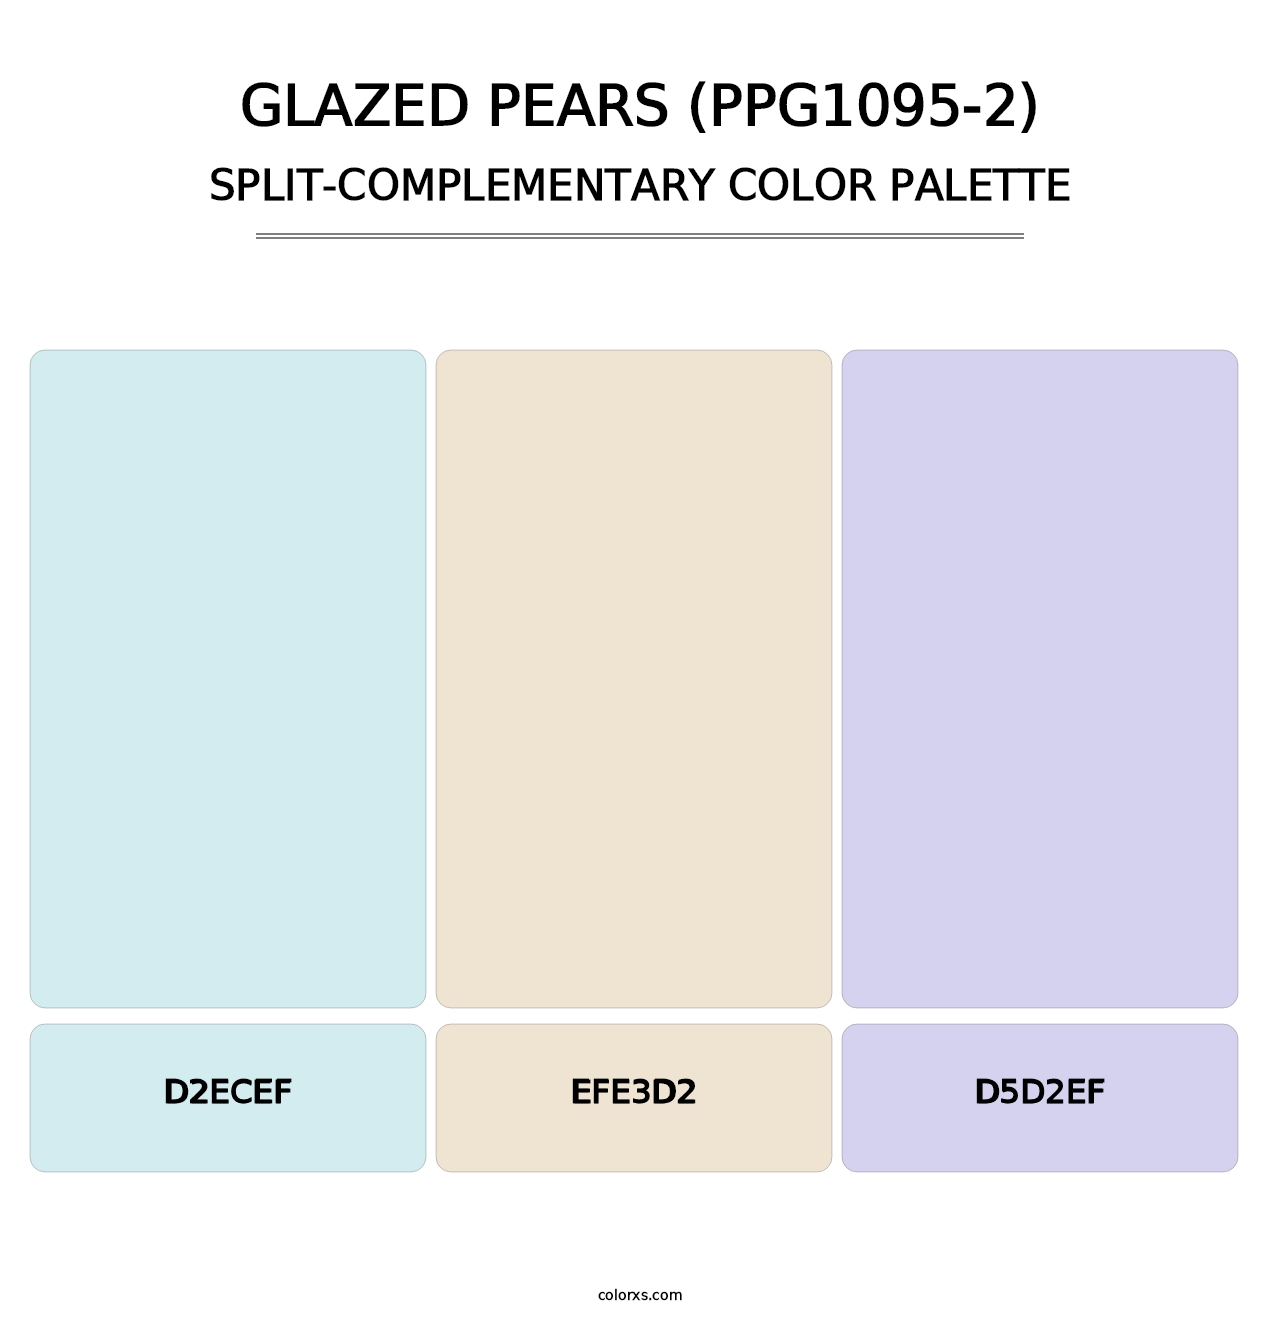 Glazed Pears (PPG1095-2) - Split-Complementary Color Palette